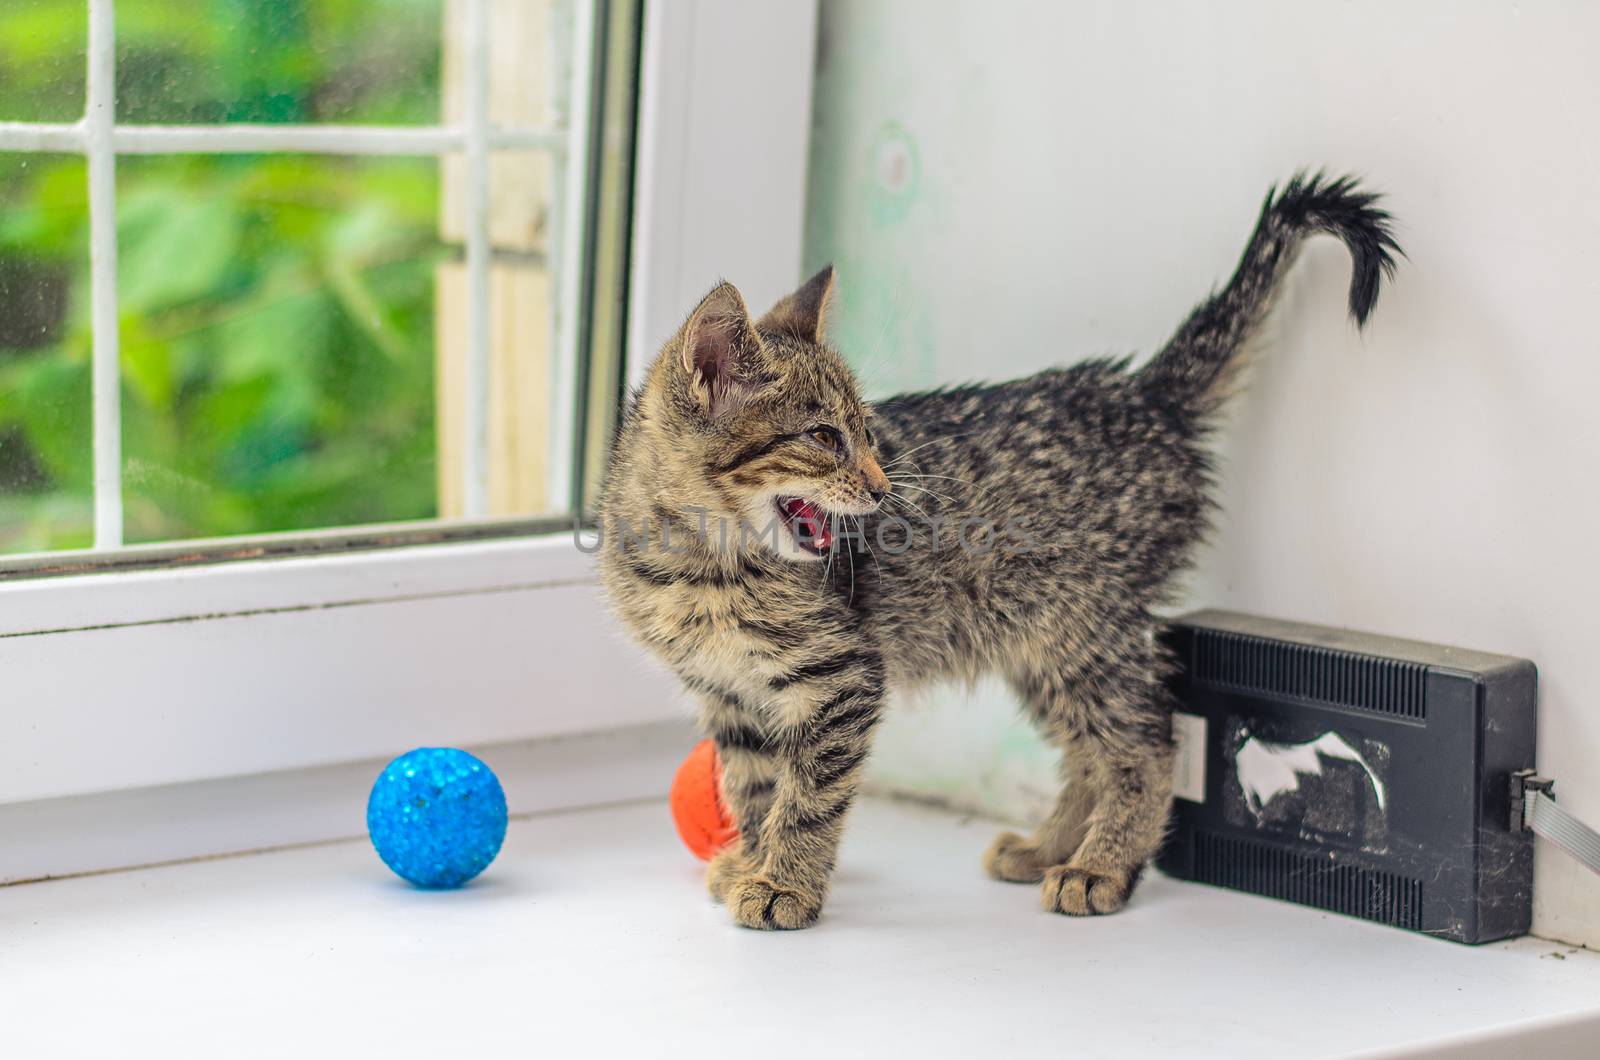 little cat meows on the windowsill by chernobrovin